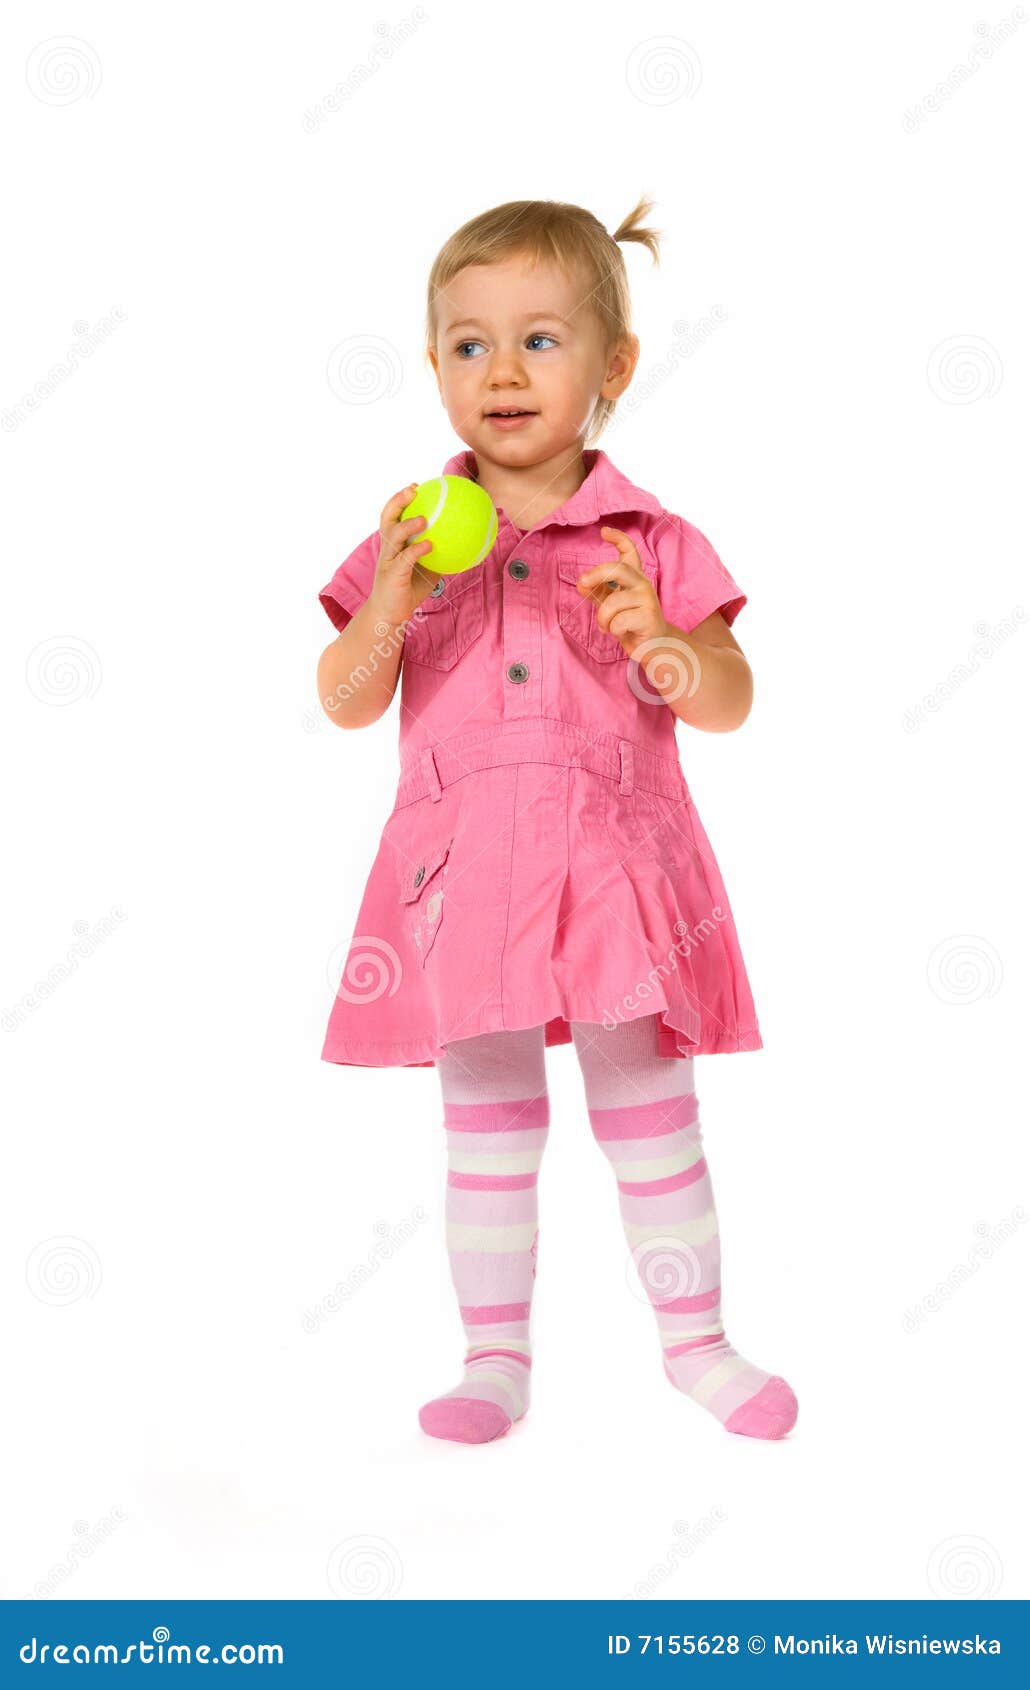 https://thumbs.dreamstime.com/z/baby-girl-holding-tennis-ball-7155628.jpg